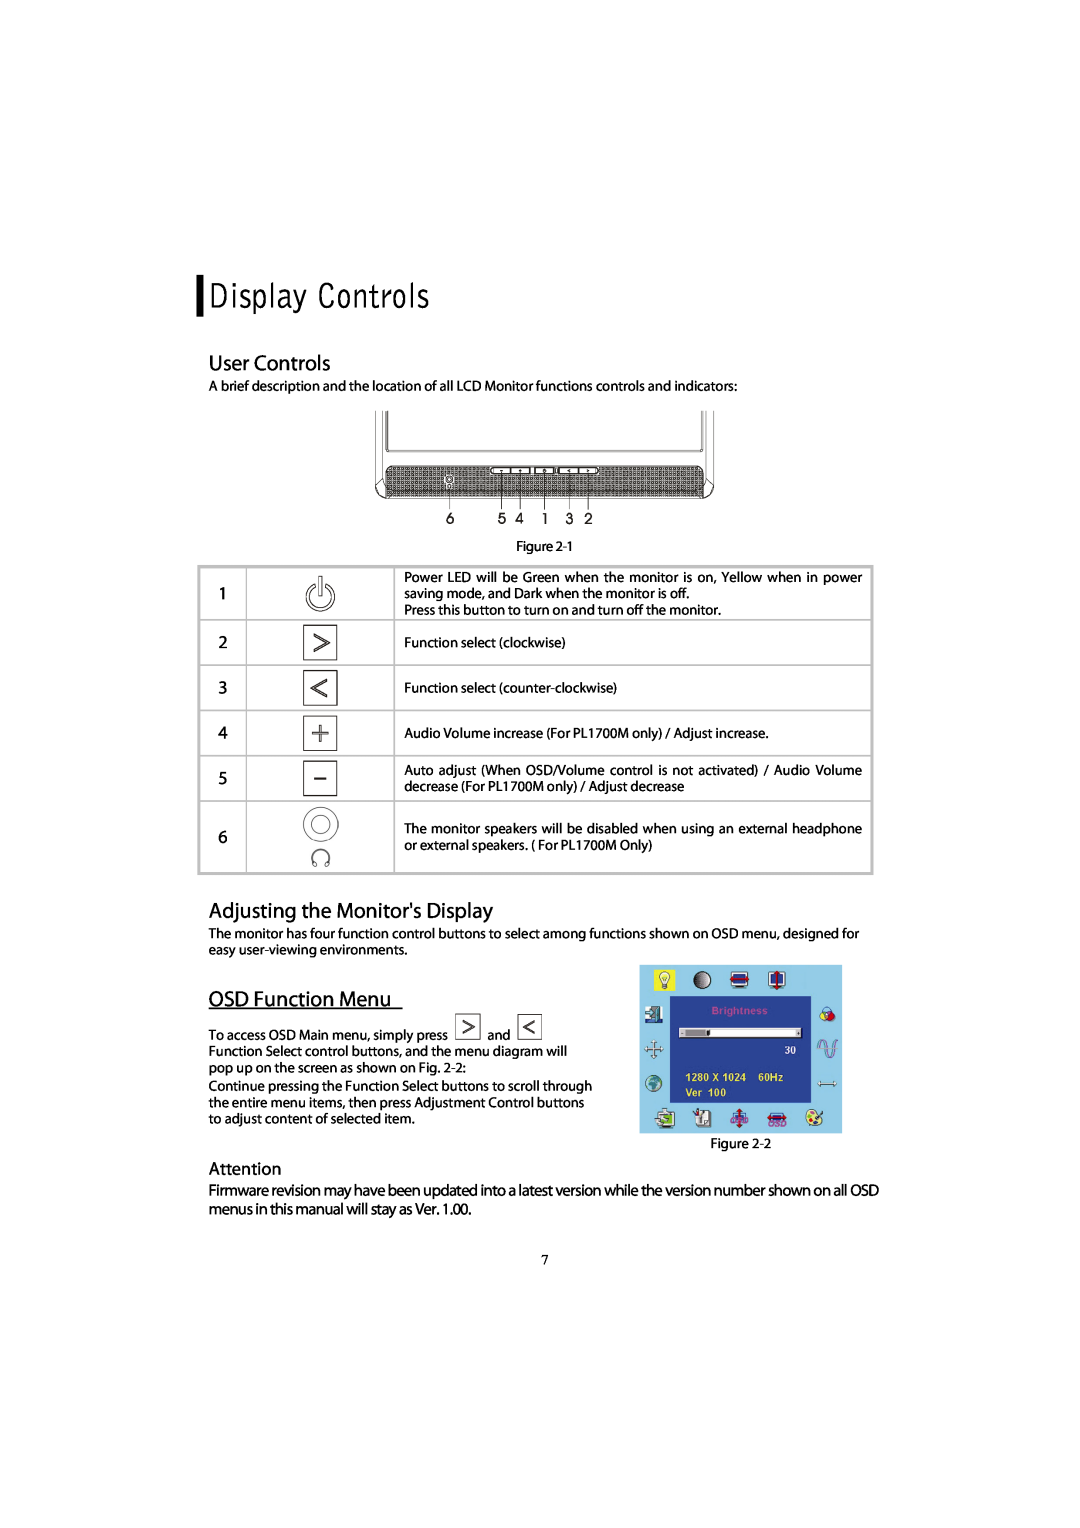 Planar PL1700M manual Display Controls, User Controls, Adjusting the Monitors Display, OSD Function Menu 